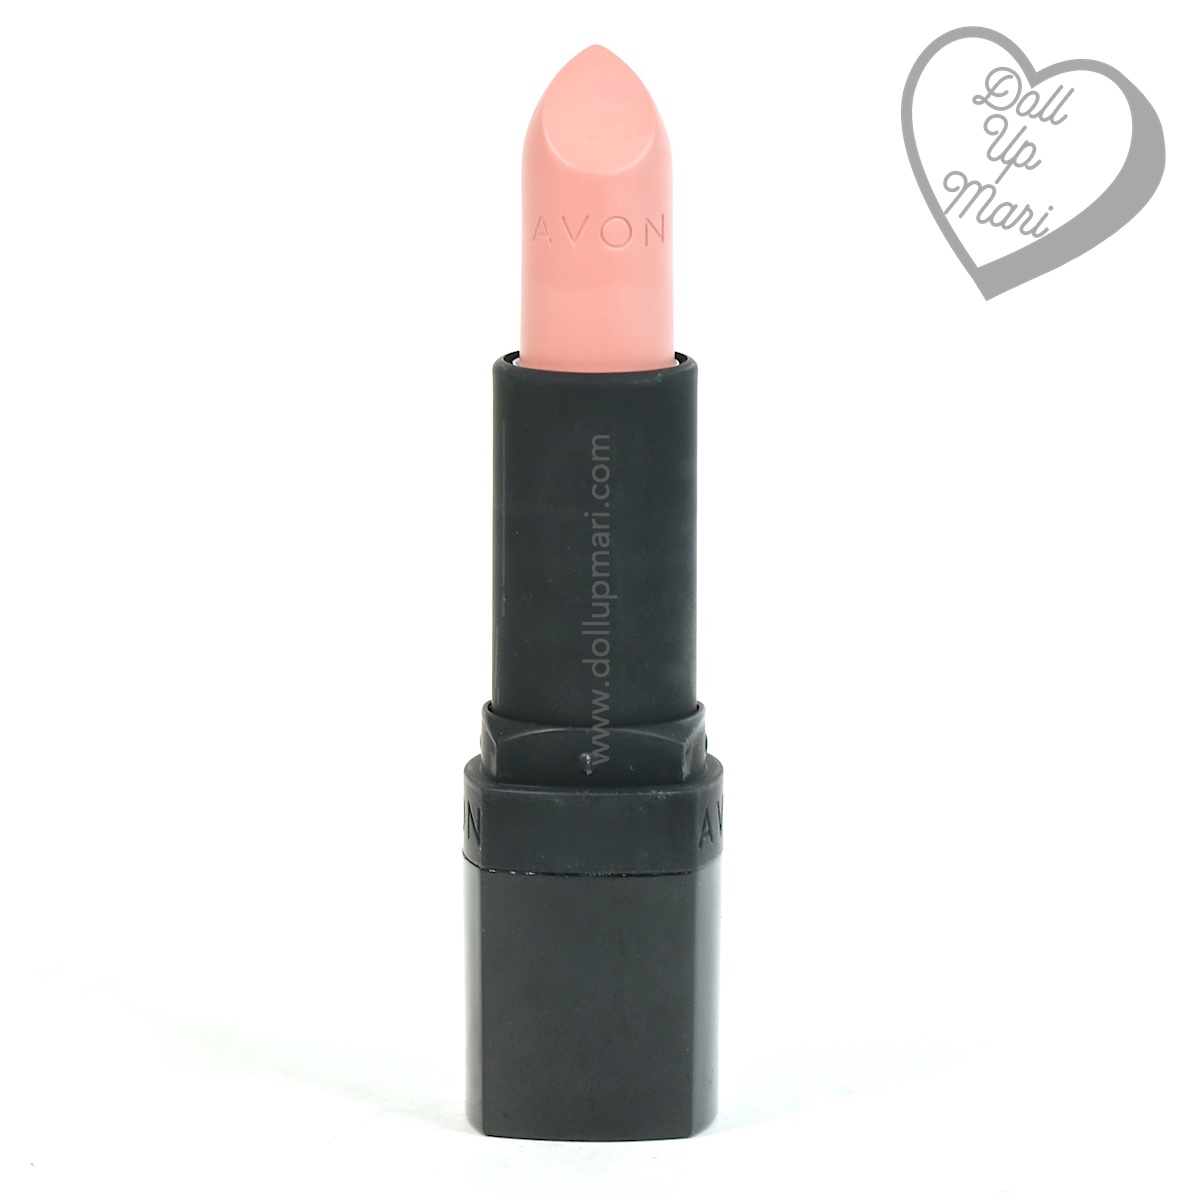 Pack shot of Blush Shade of AVON Perfectly Matte Lipstick